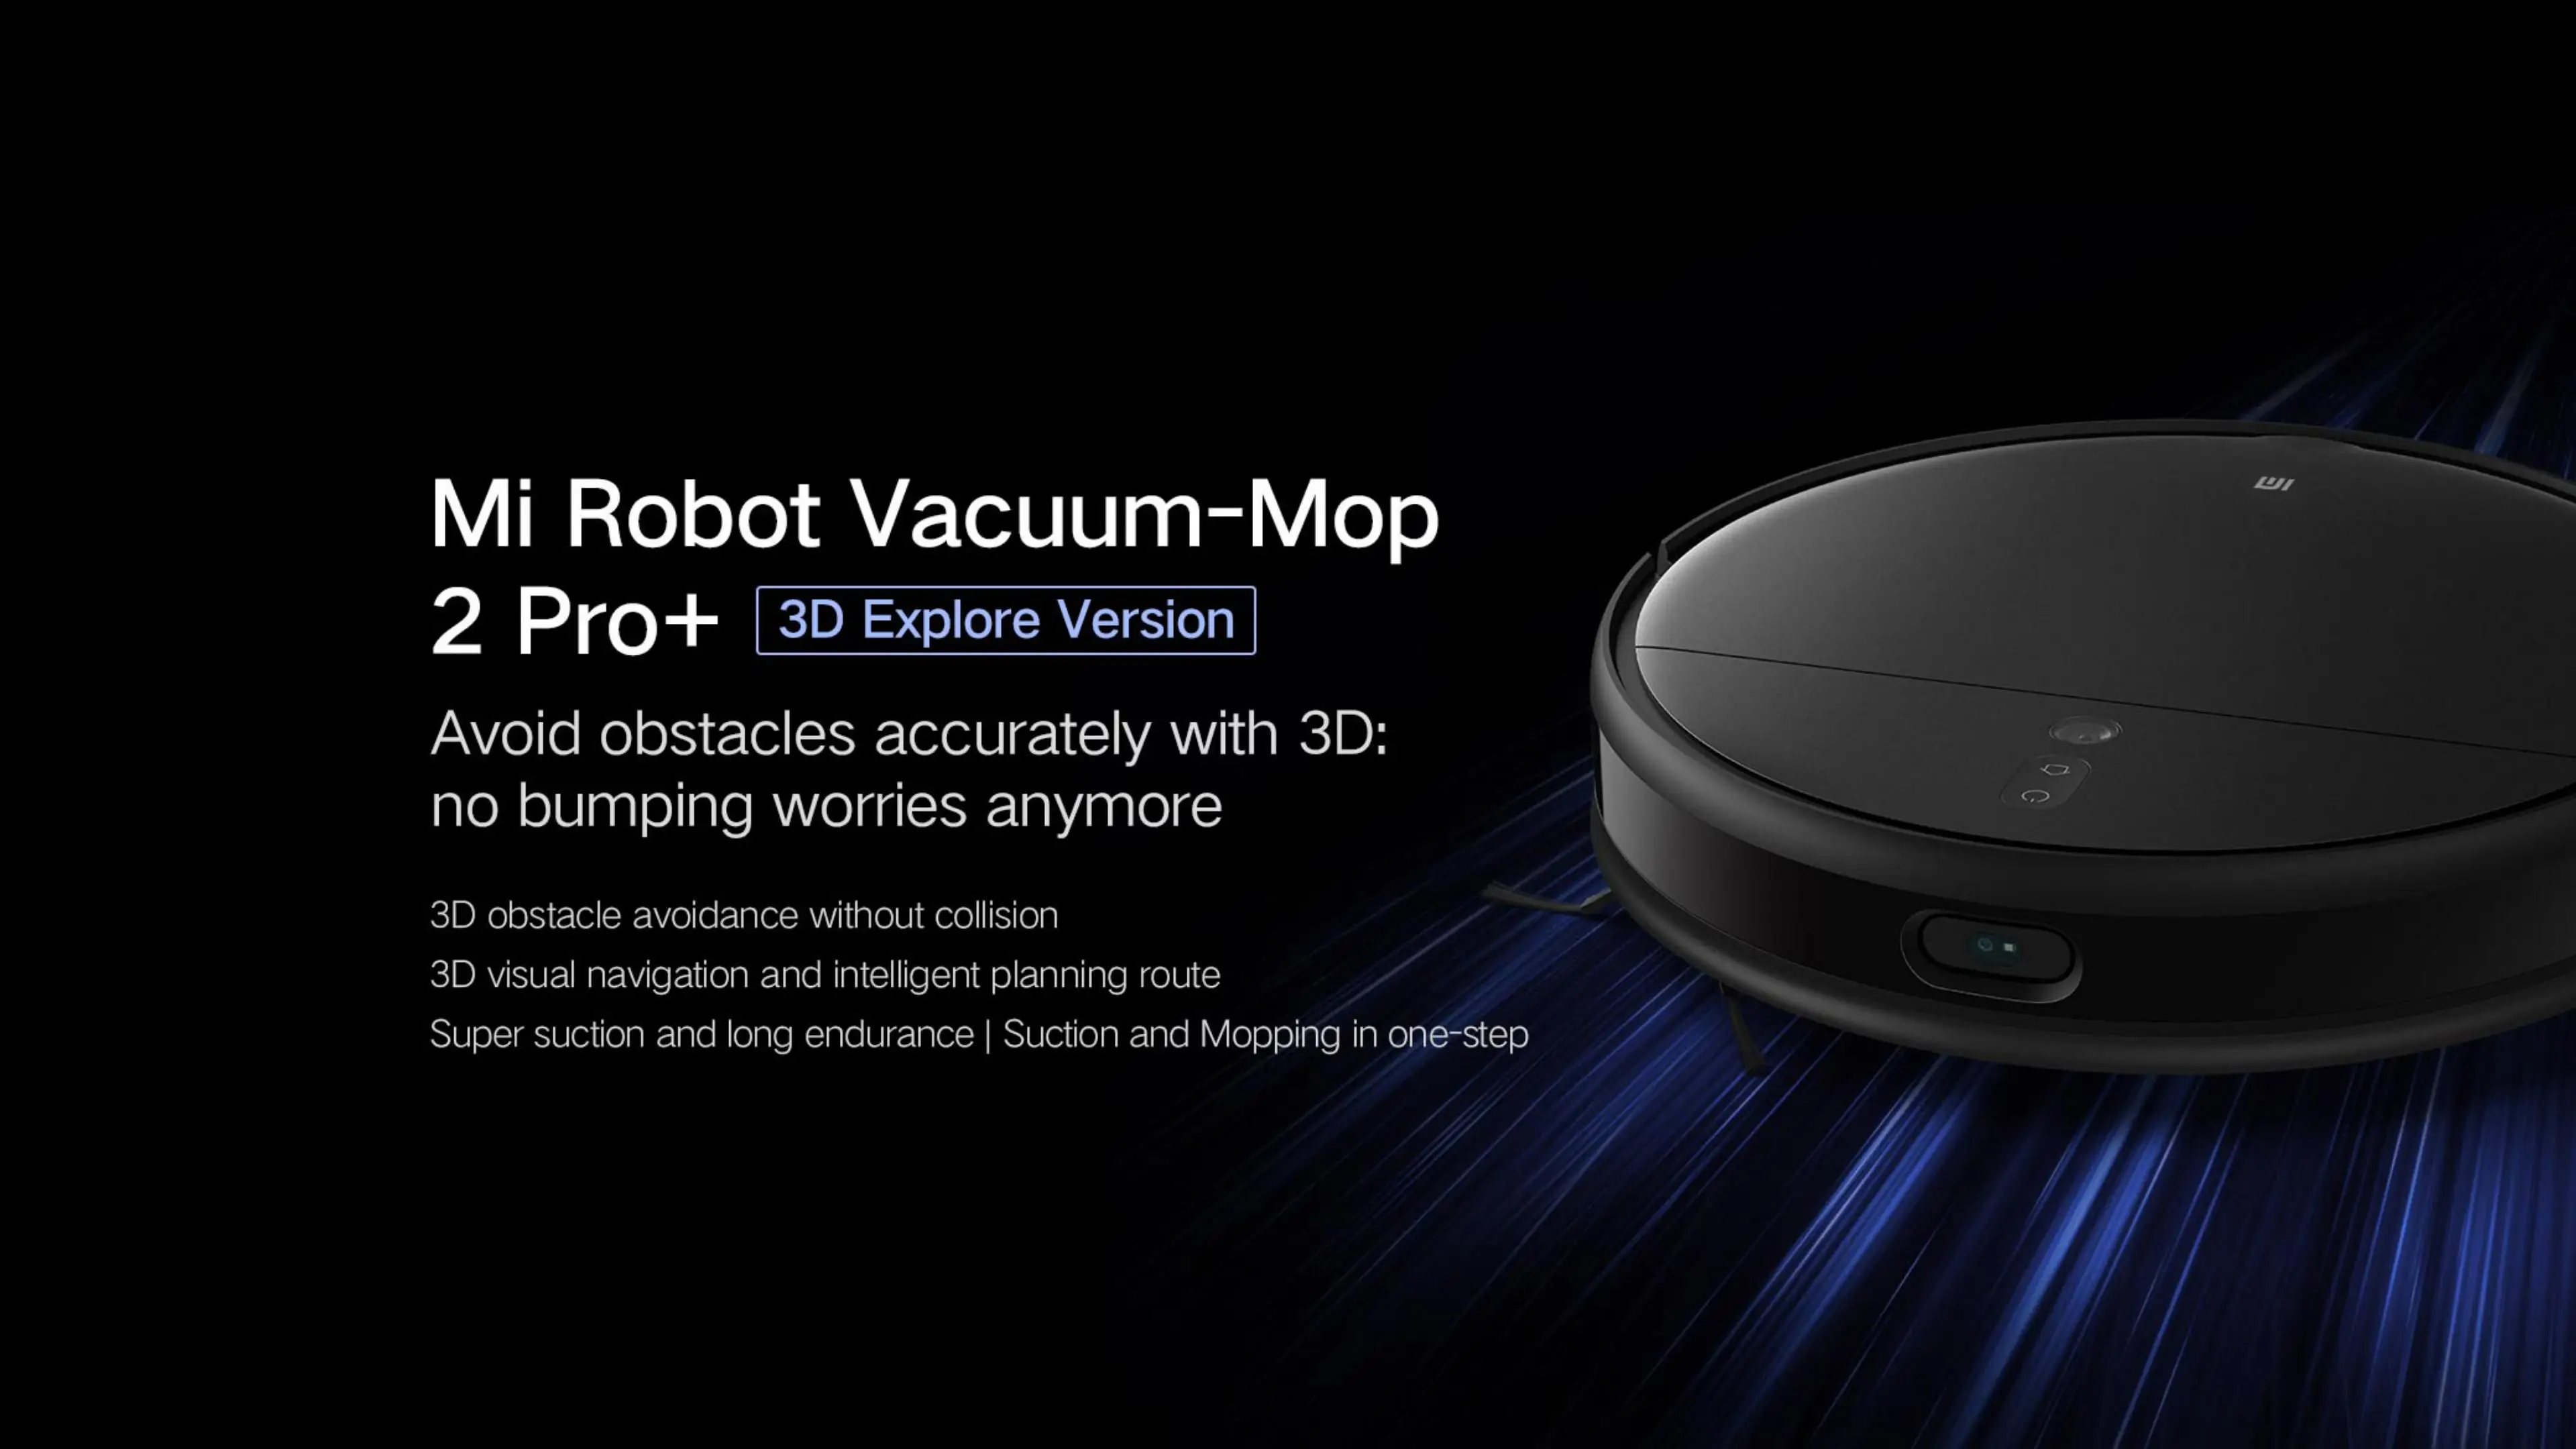 Xiaomi Vacuum Mop 2 S Купить